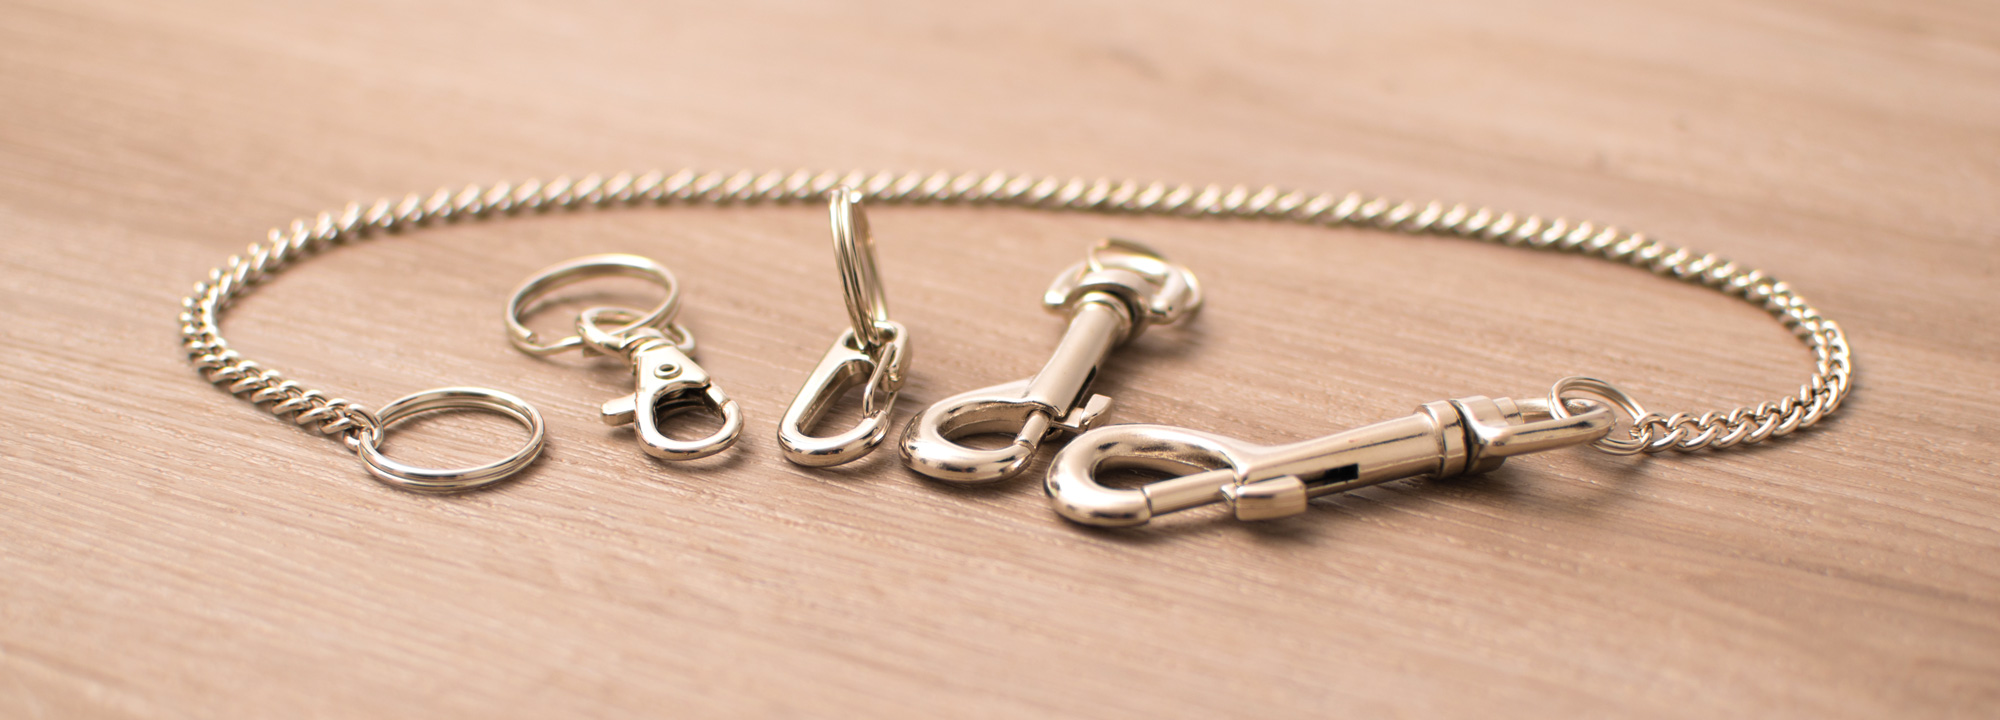 Snap hooks & key chains